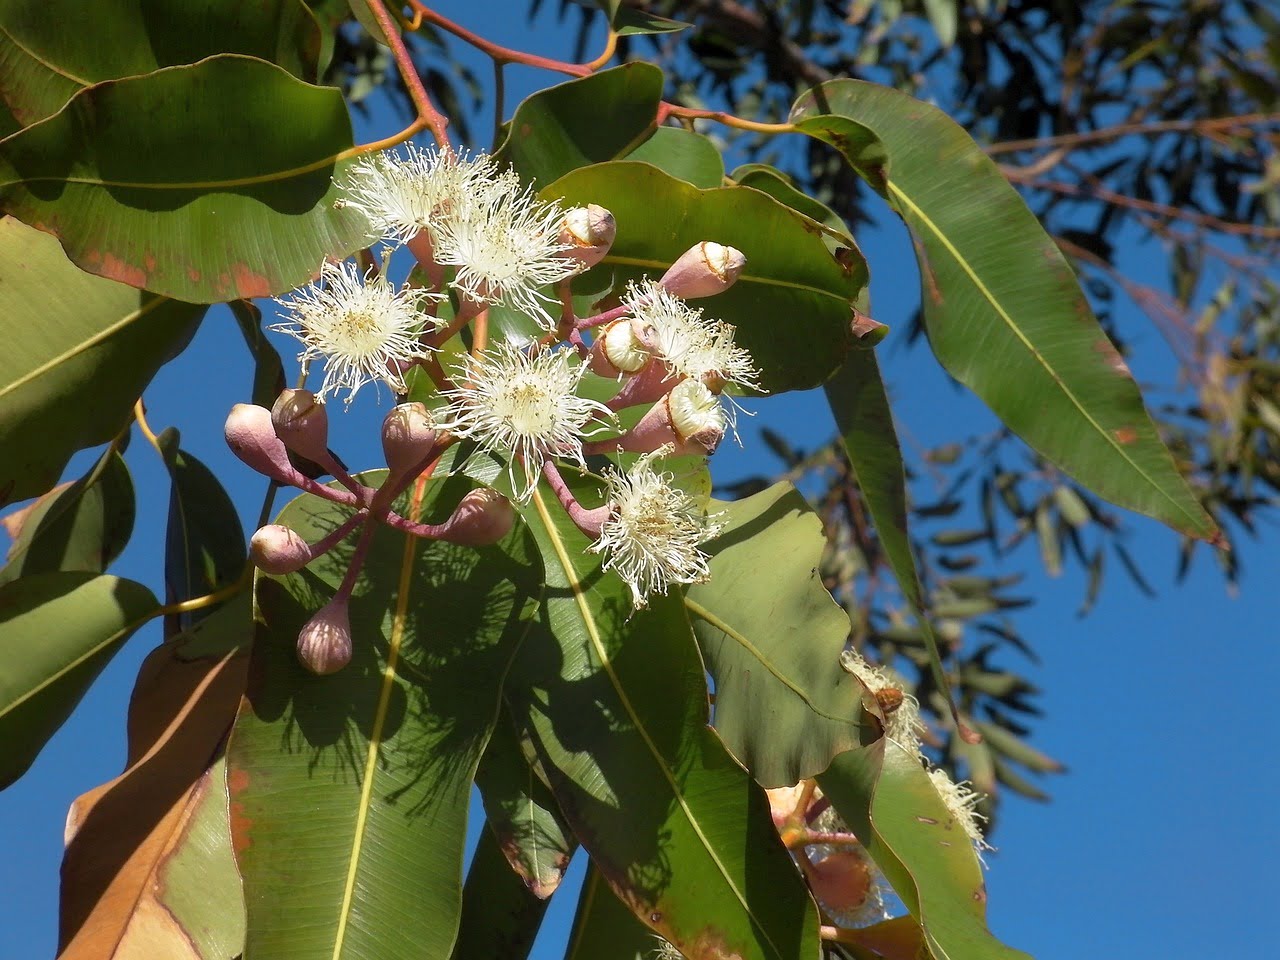 Can we eat eucalyptus leaves?